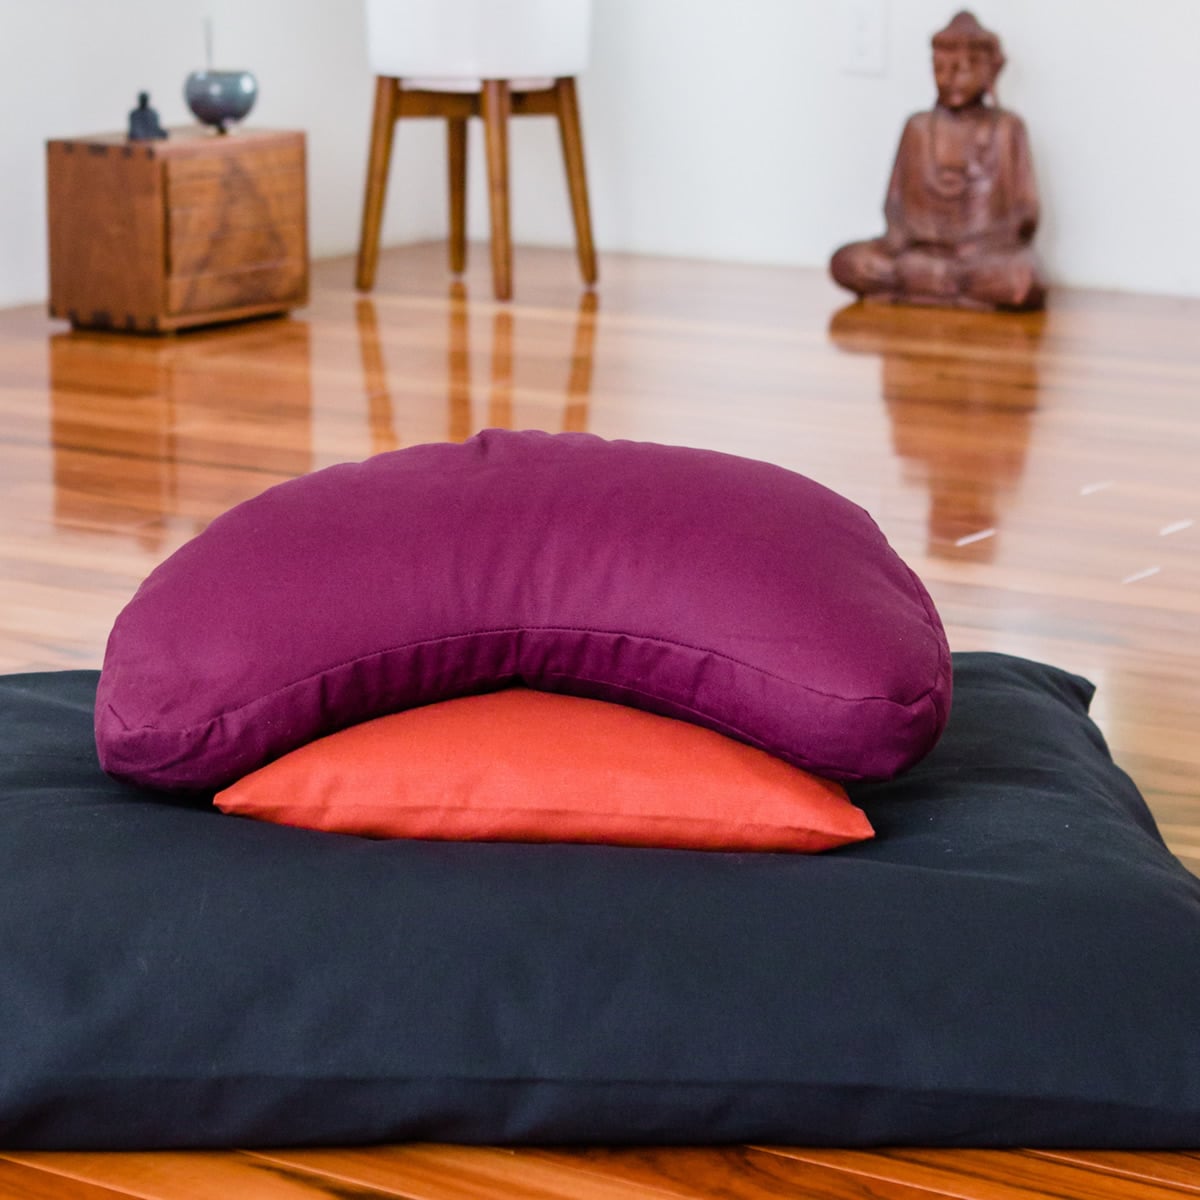 Buy Organic Crescent Meditation Cushions - 4 Pack, Meditation Cushions